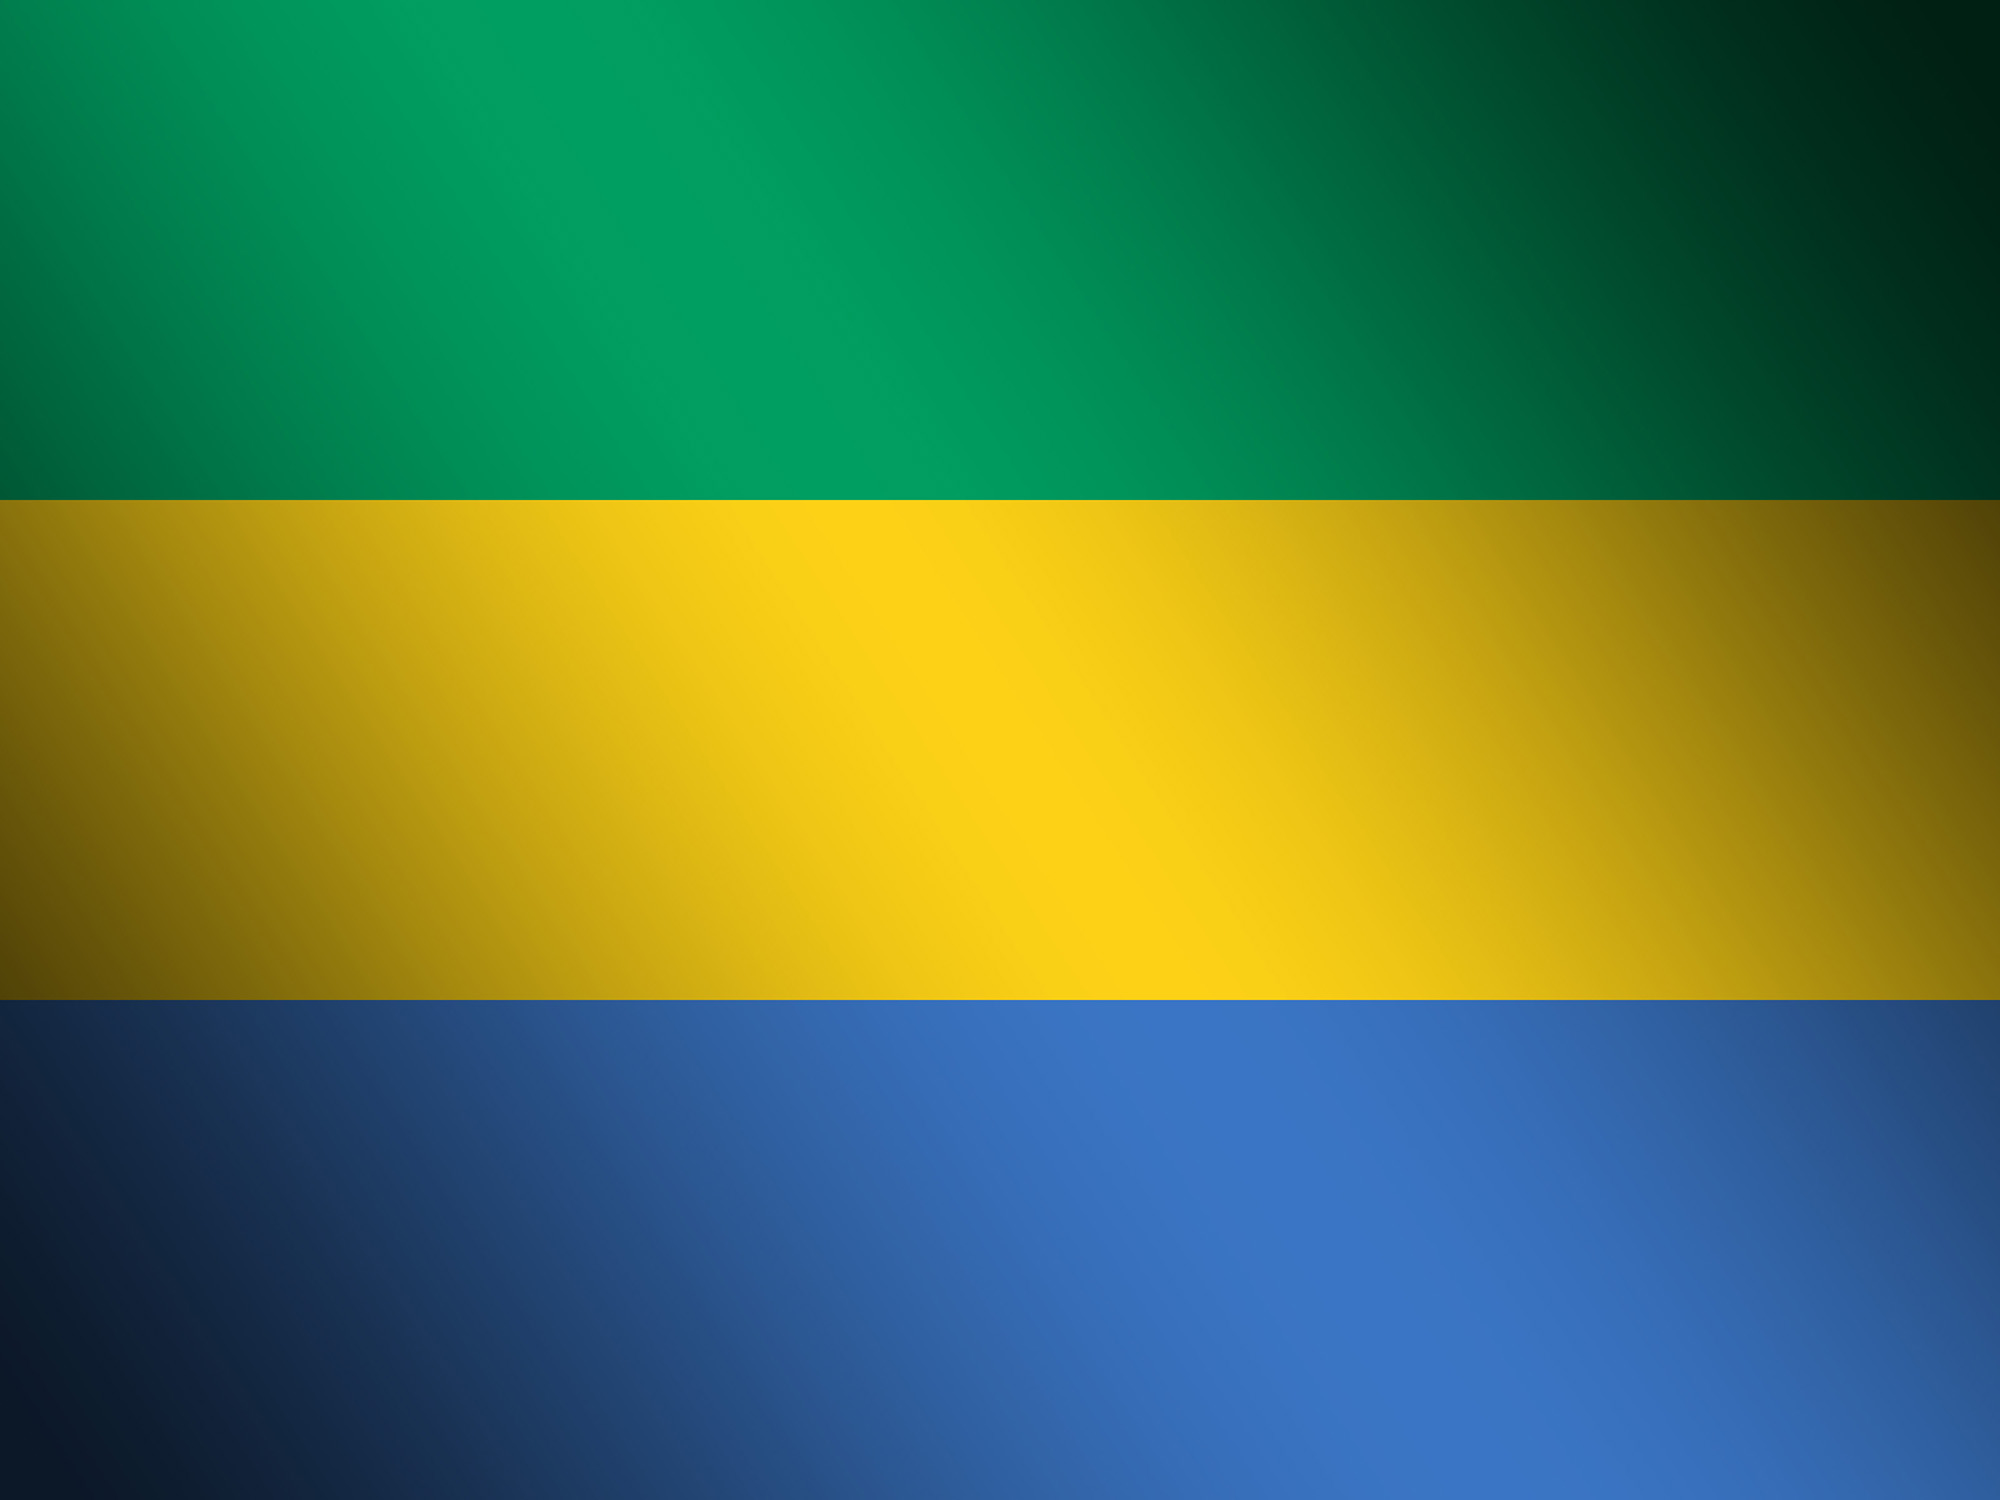 Желто зелено синий флаг страна. Gabon флаг. Флаг Республики Габона. Флаг Габона Габон. Флаг зеленый желтый синий.